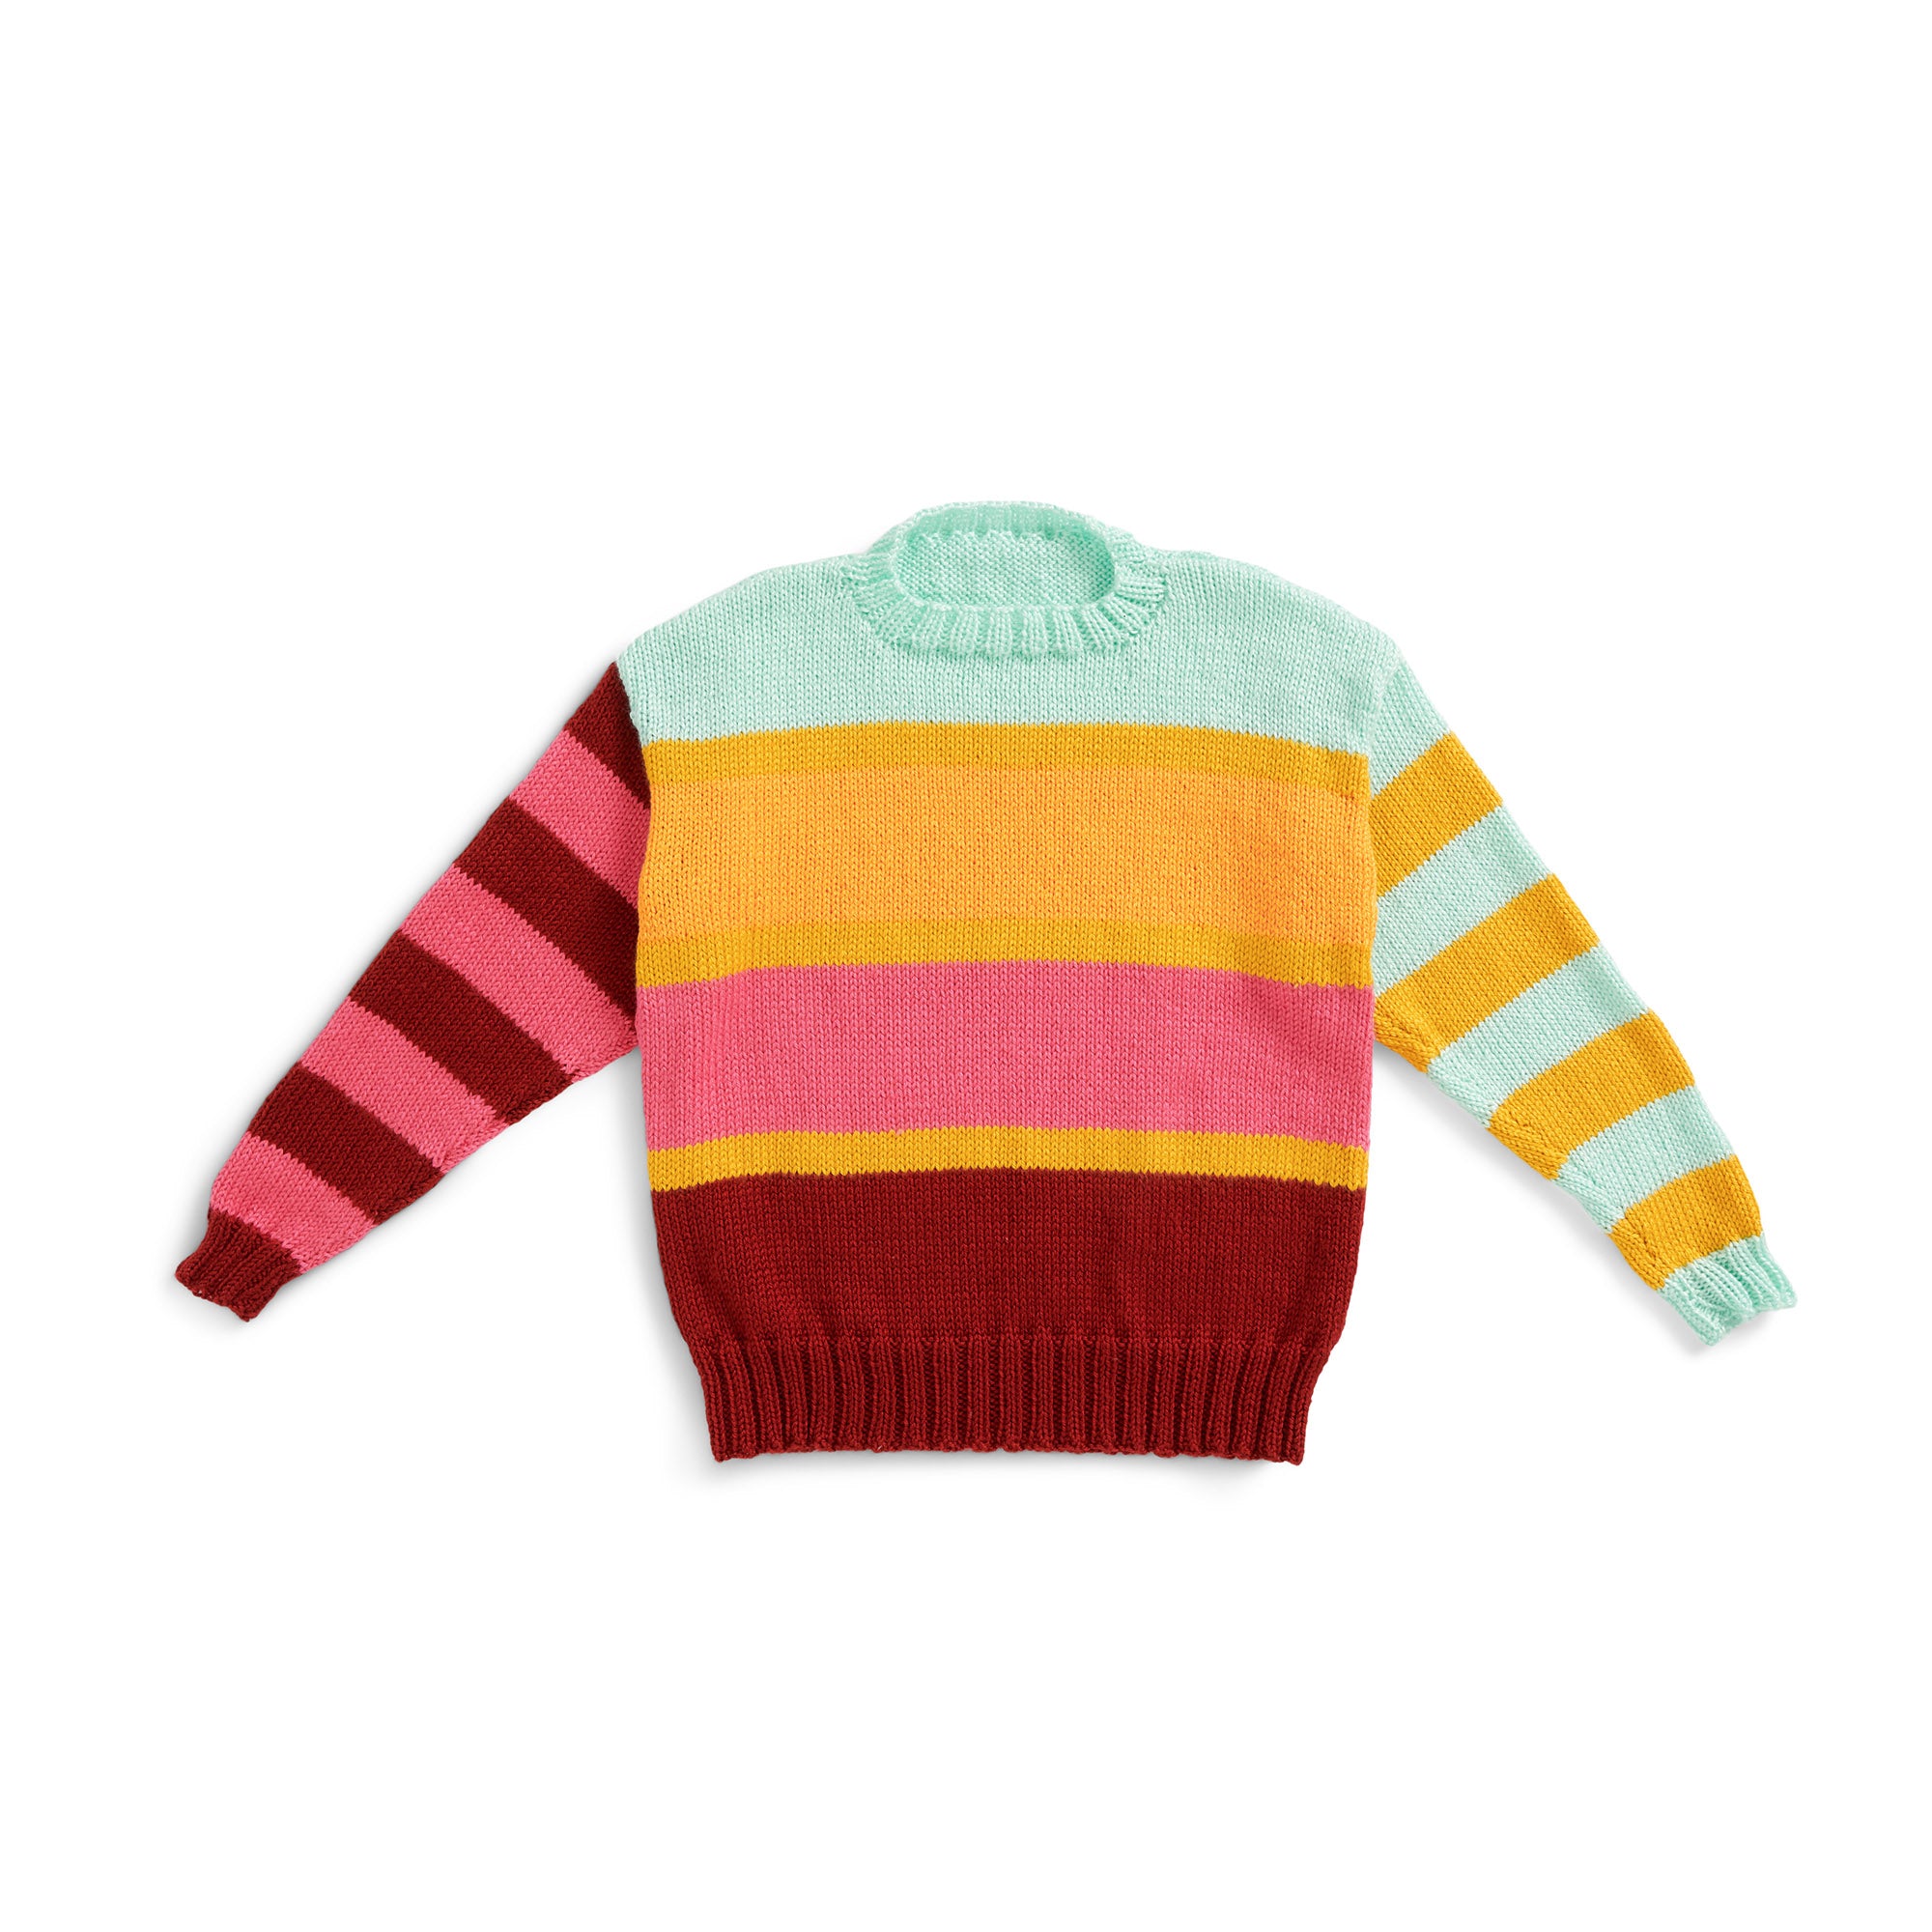 Caron Simply Soft Candy Bands Knit Sweater Pattern | Yarnspirations